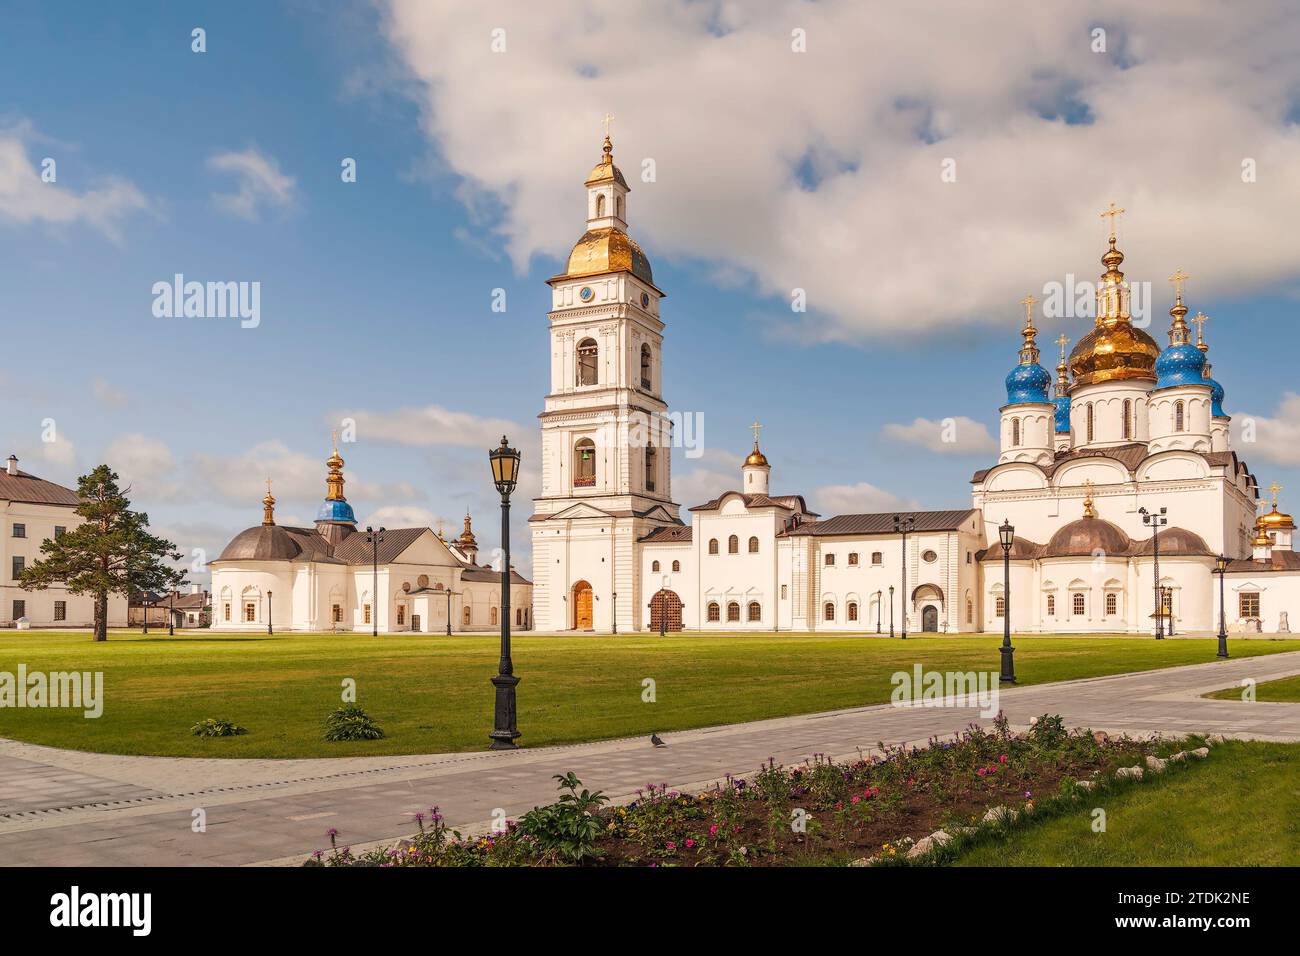 Tobolsk. Oblast Tyumen. Russland, 06. Juli 2010 - Blick auf St. Sophia-Himmelfahrt-Kathedrale und Glockenturm des Tobolsker Kreml. Der Tobolsker Kreml Stockfoto